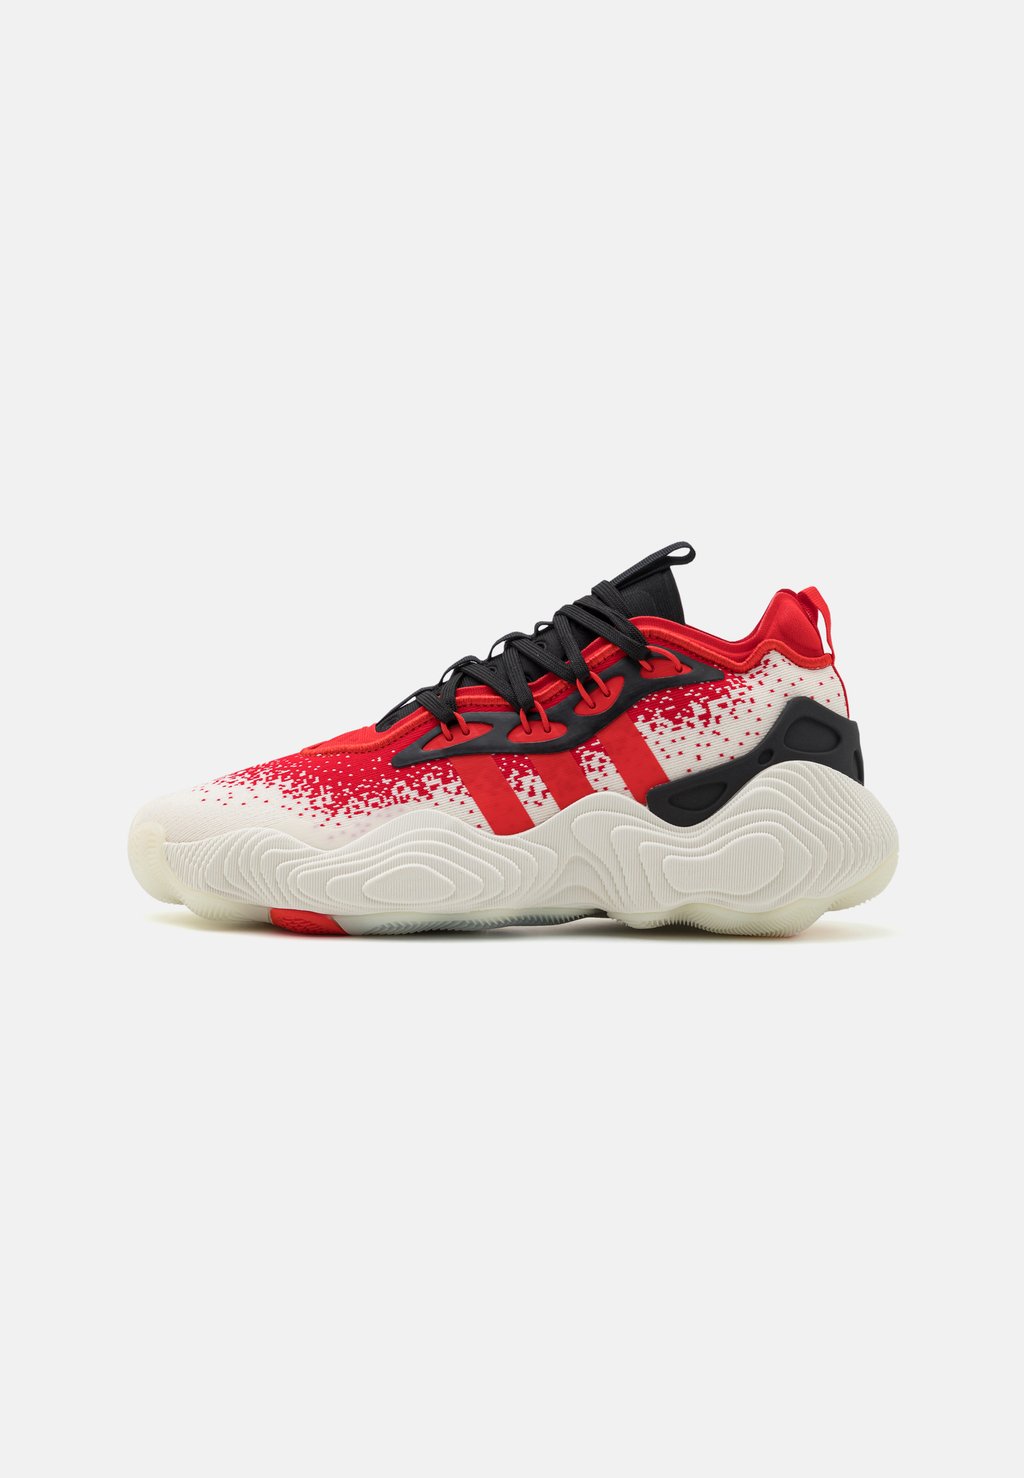 Баскетбольные кроссовки Trae Young Adidas, цвет off white vivid red core black